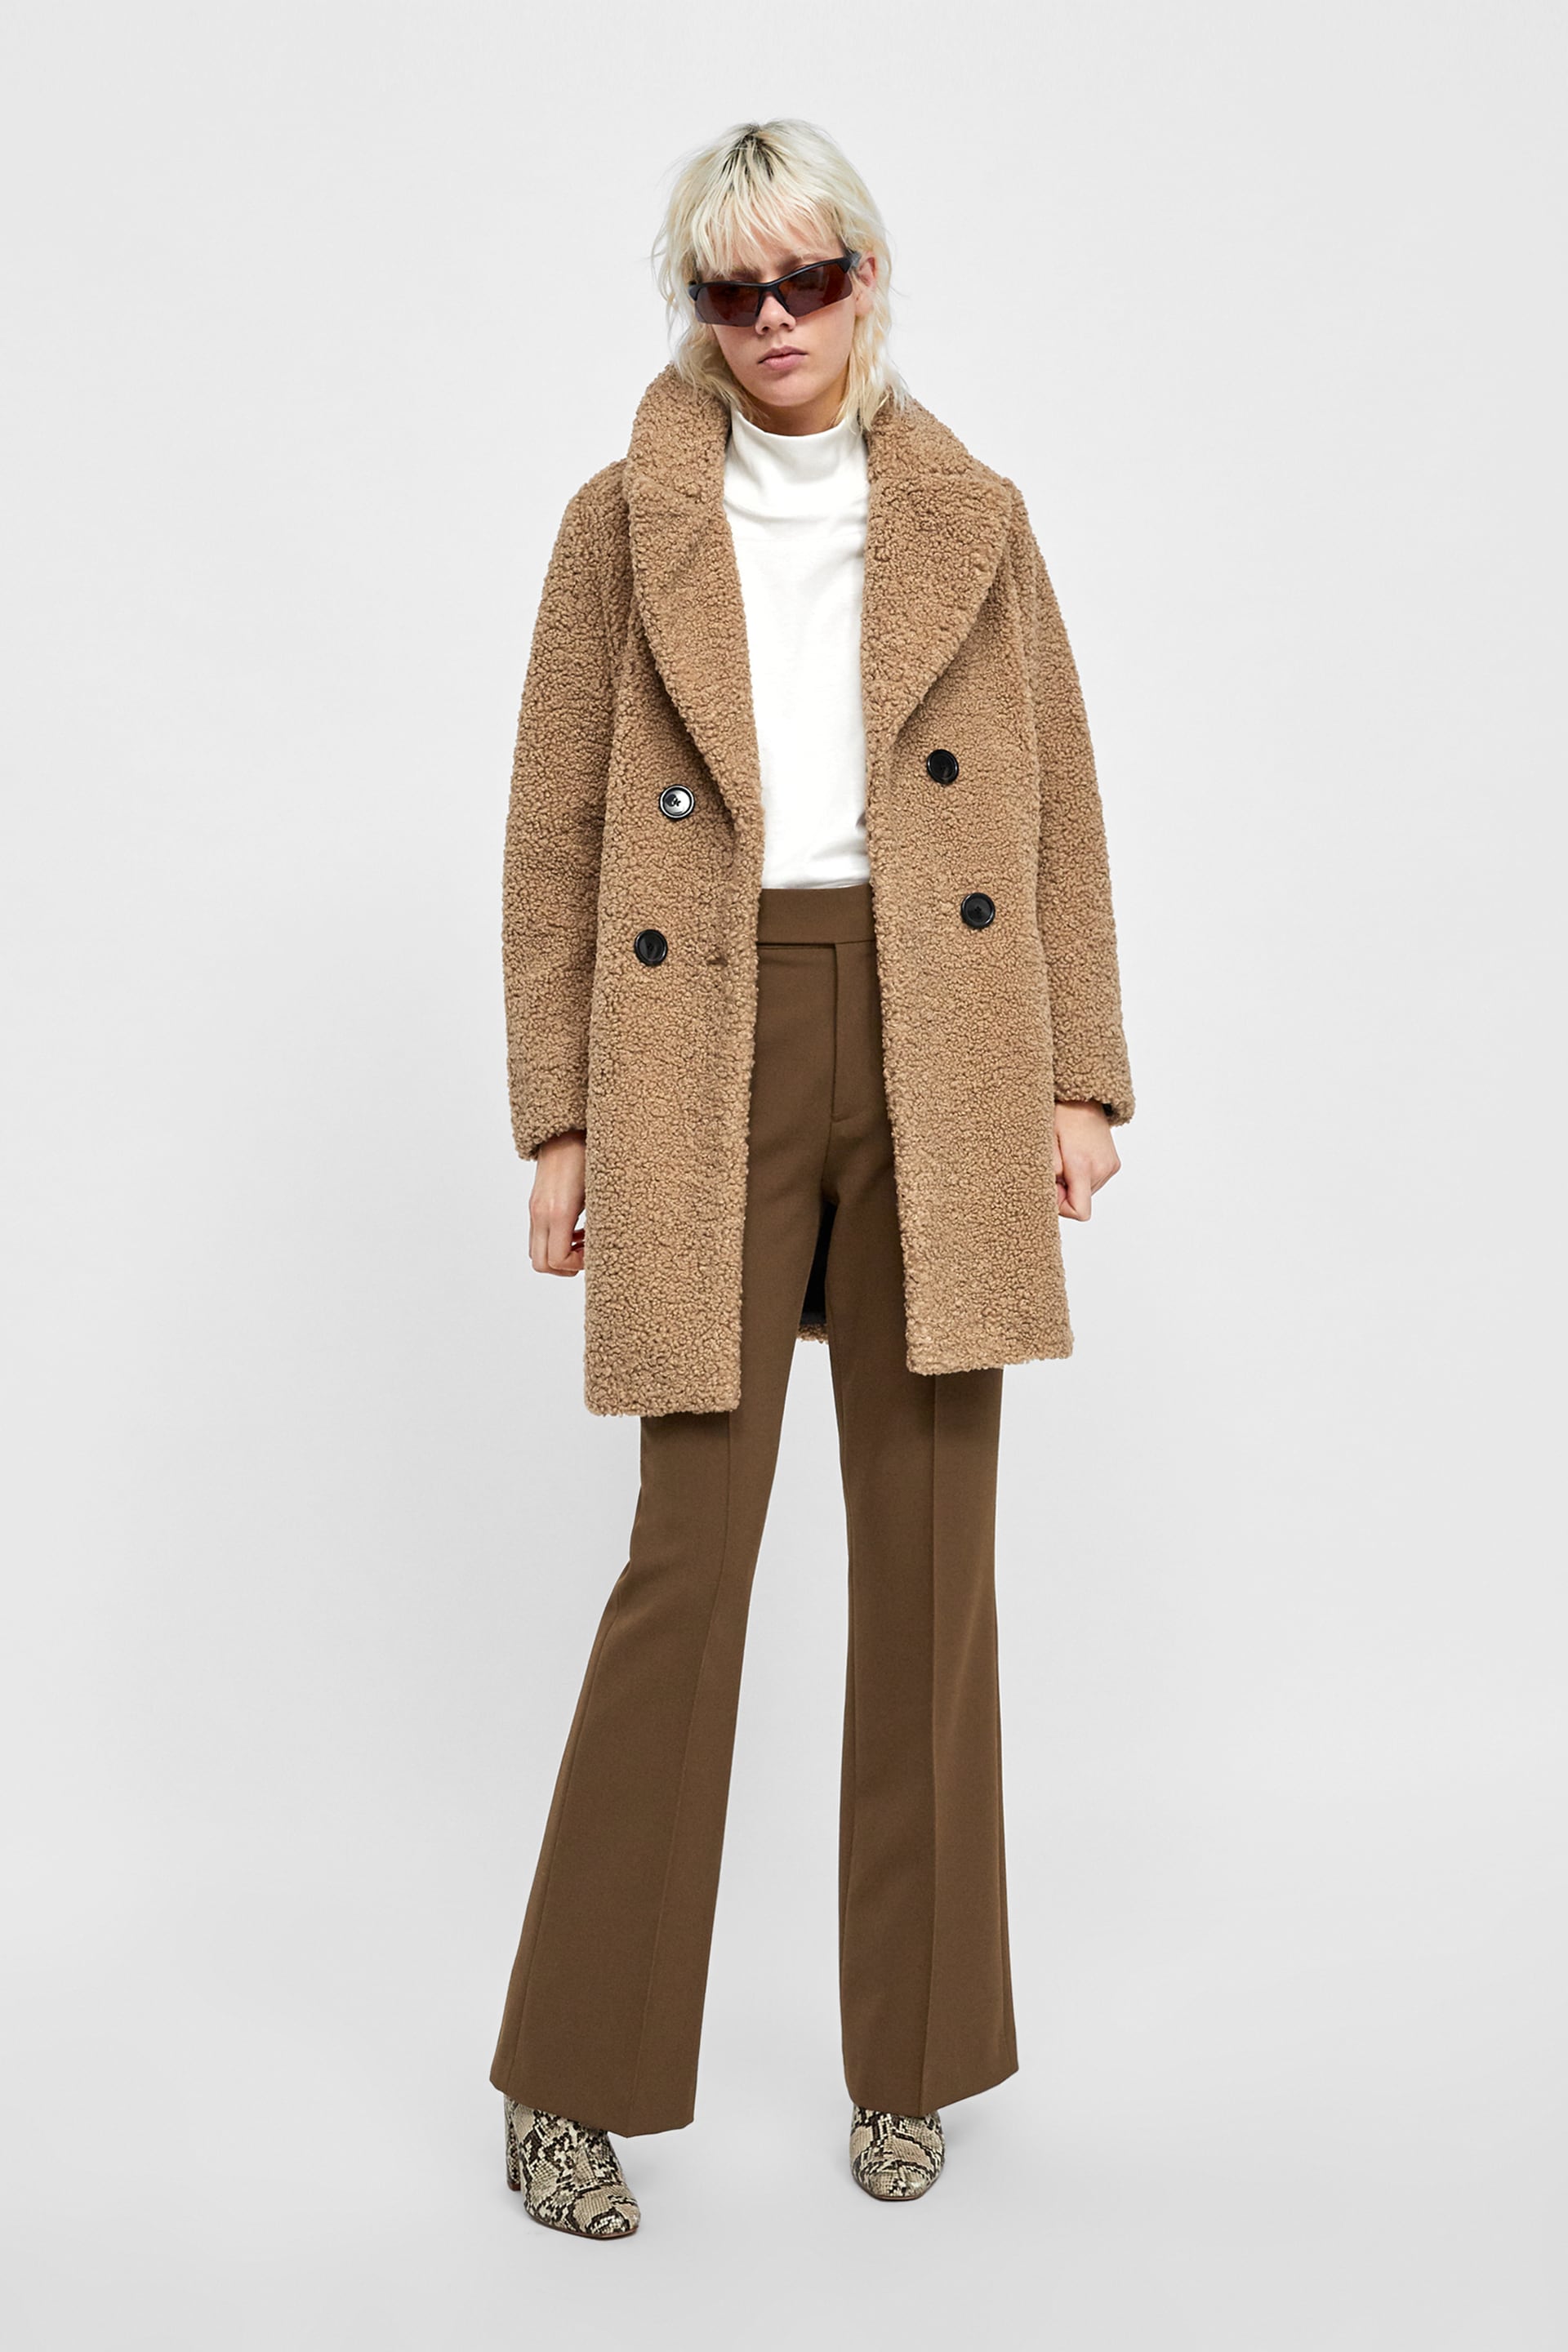 Cappotto cammello Zara teddy bear coat